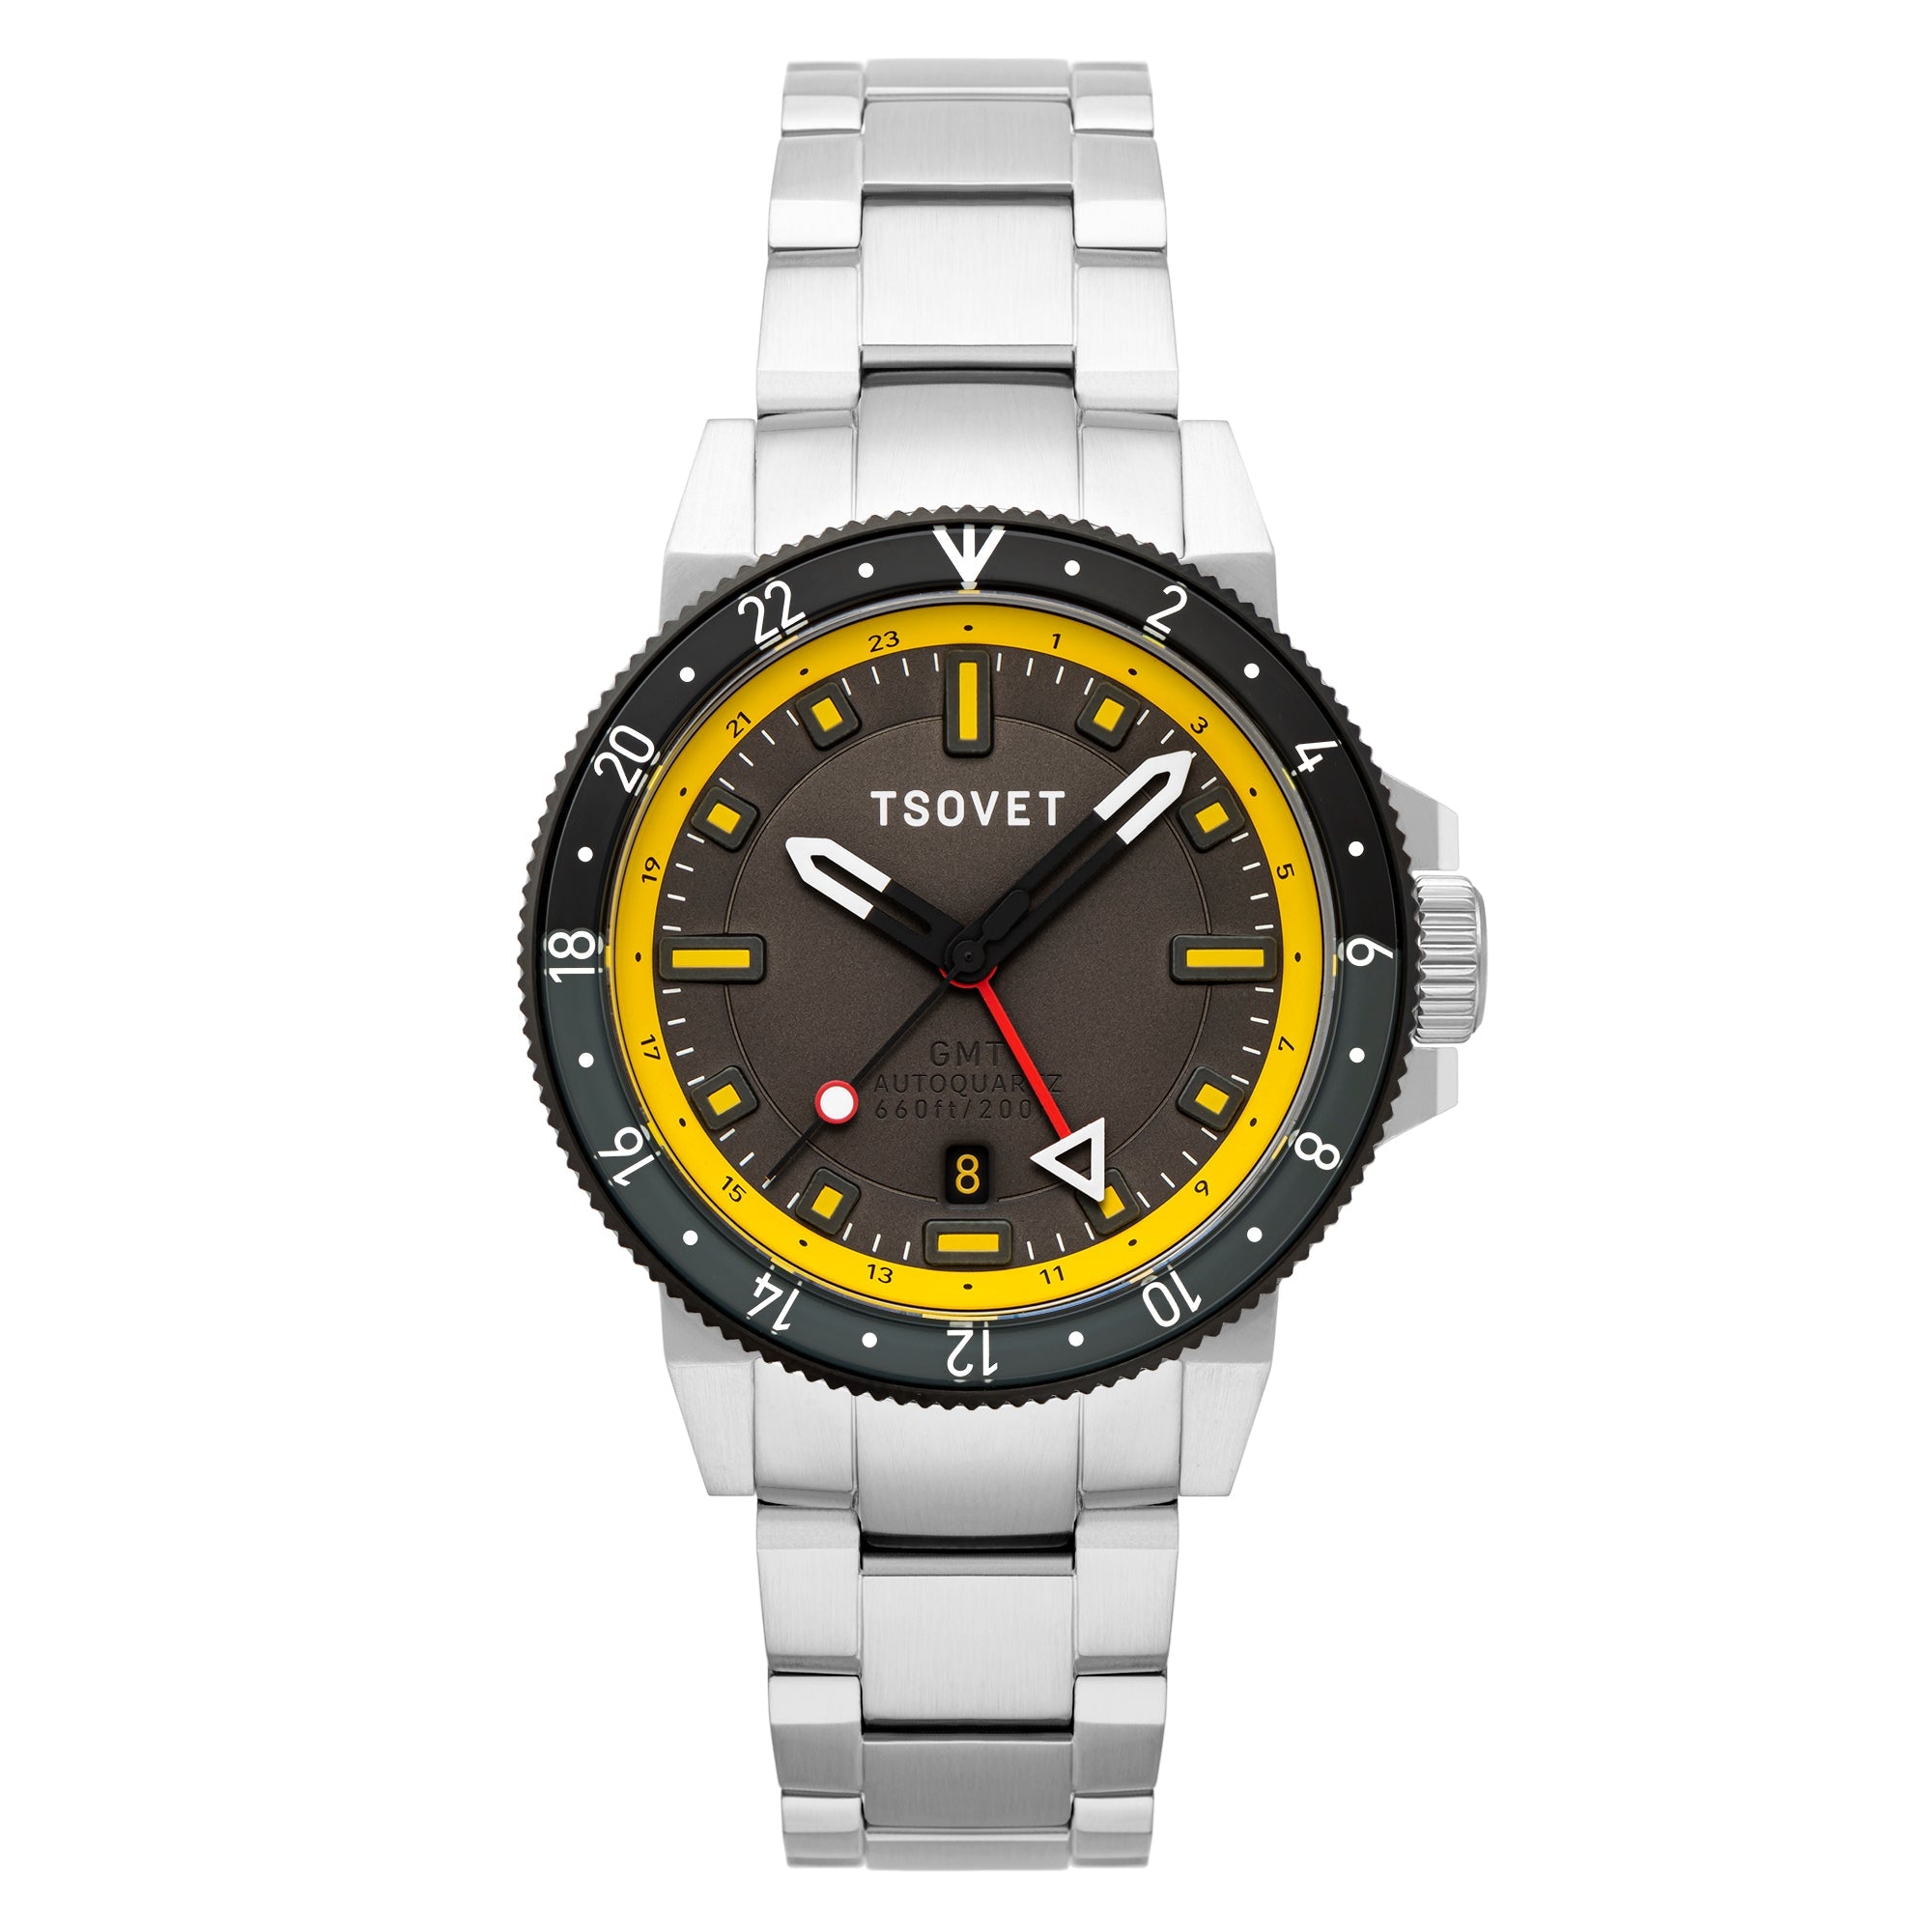 TSOVET Tsovet SMT-DW42 GMT Men's Japanese Hybrid Automatic Glass Watch TS-4004-55